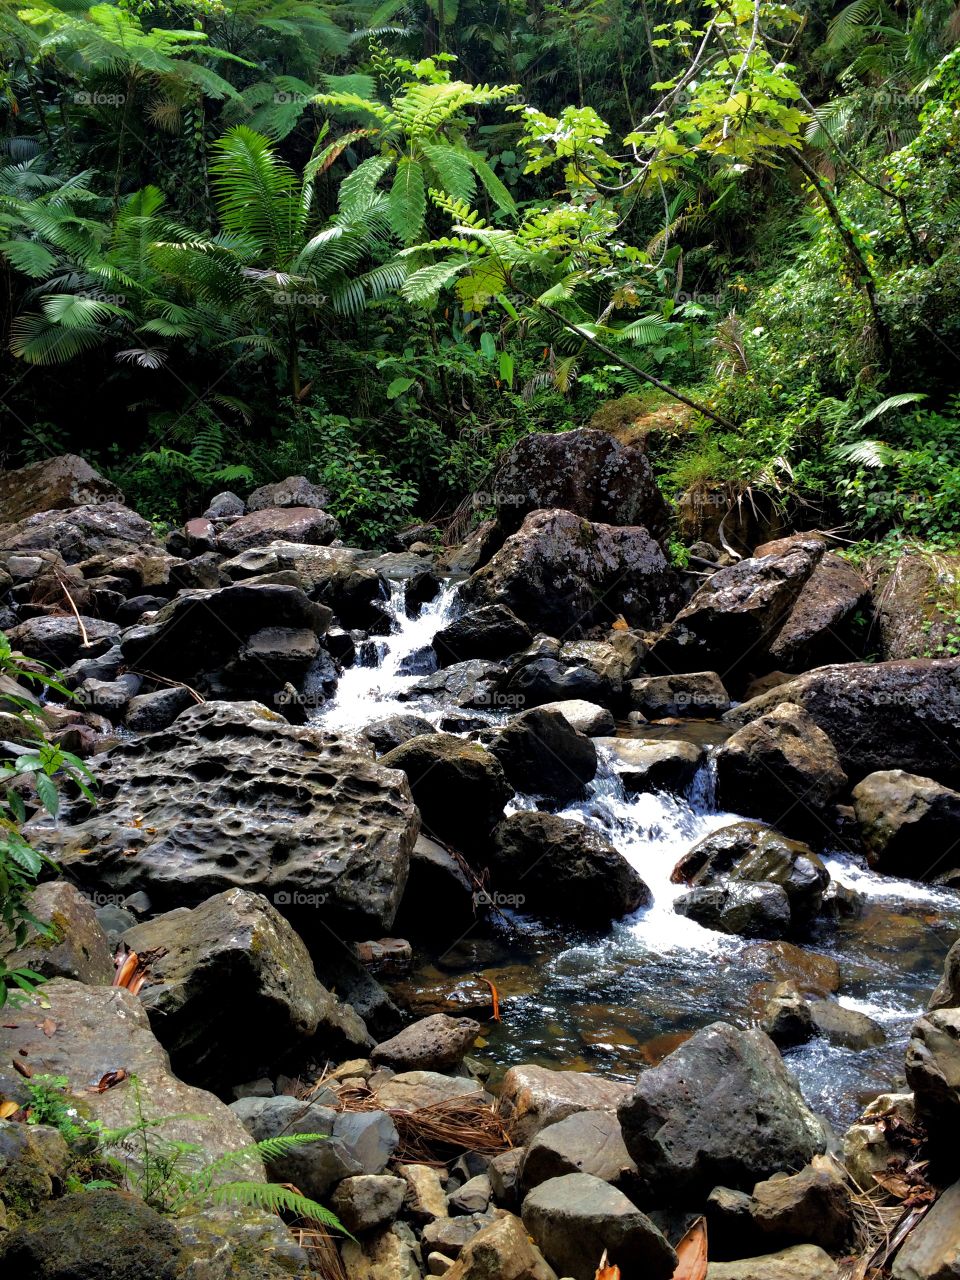 La Mina 1. The stream that leads to La Mina waterfalls in El Yunque, Puerto Rico.